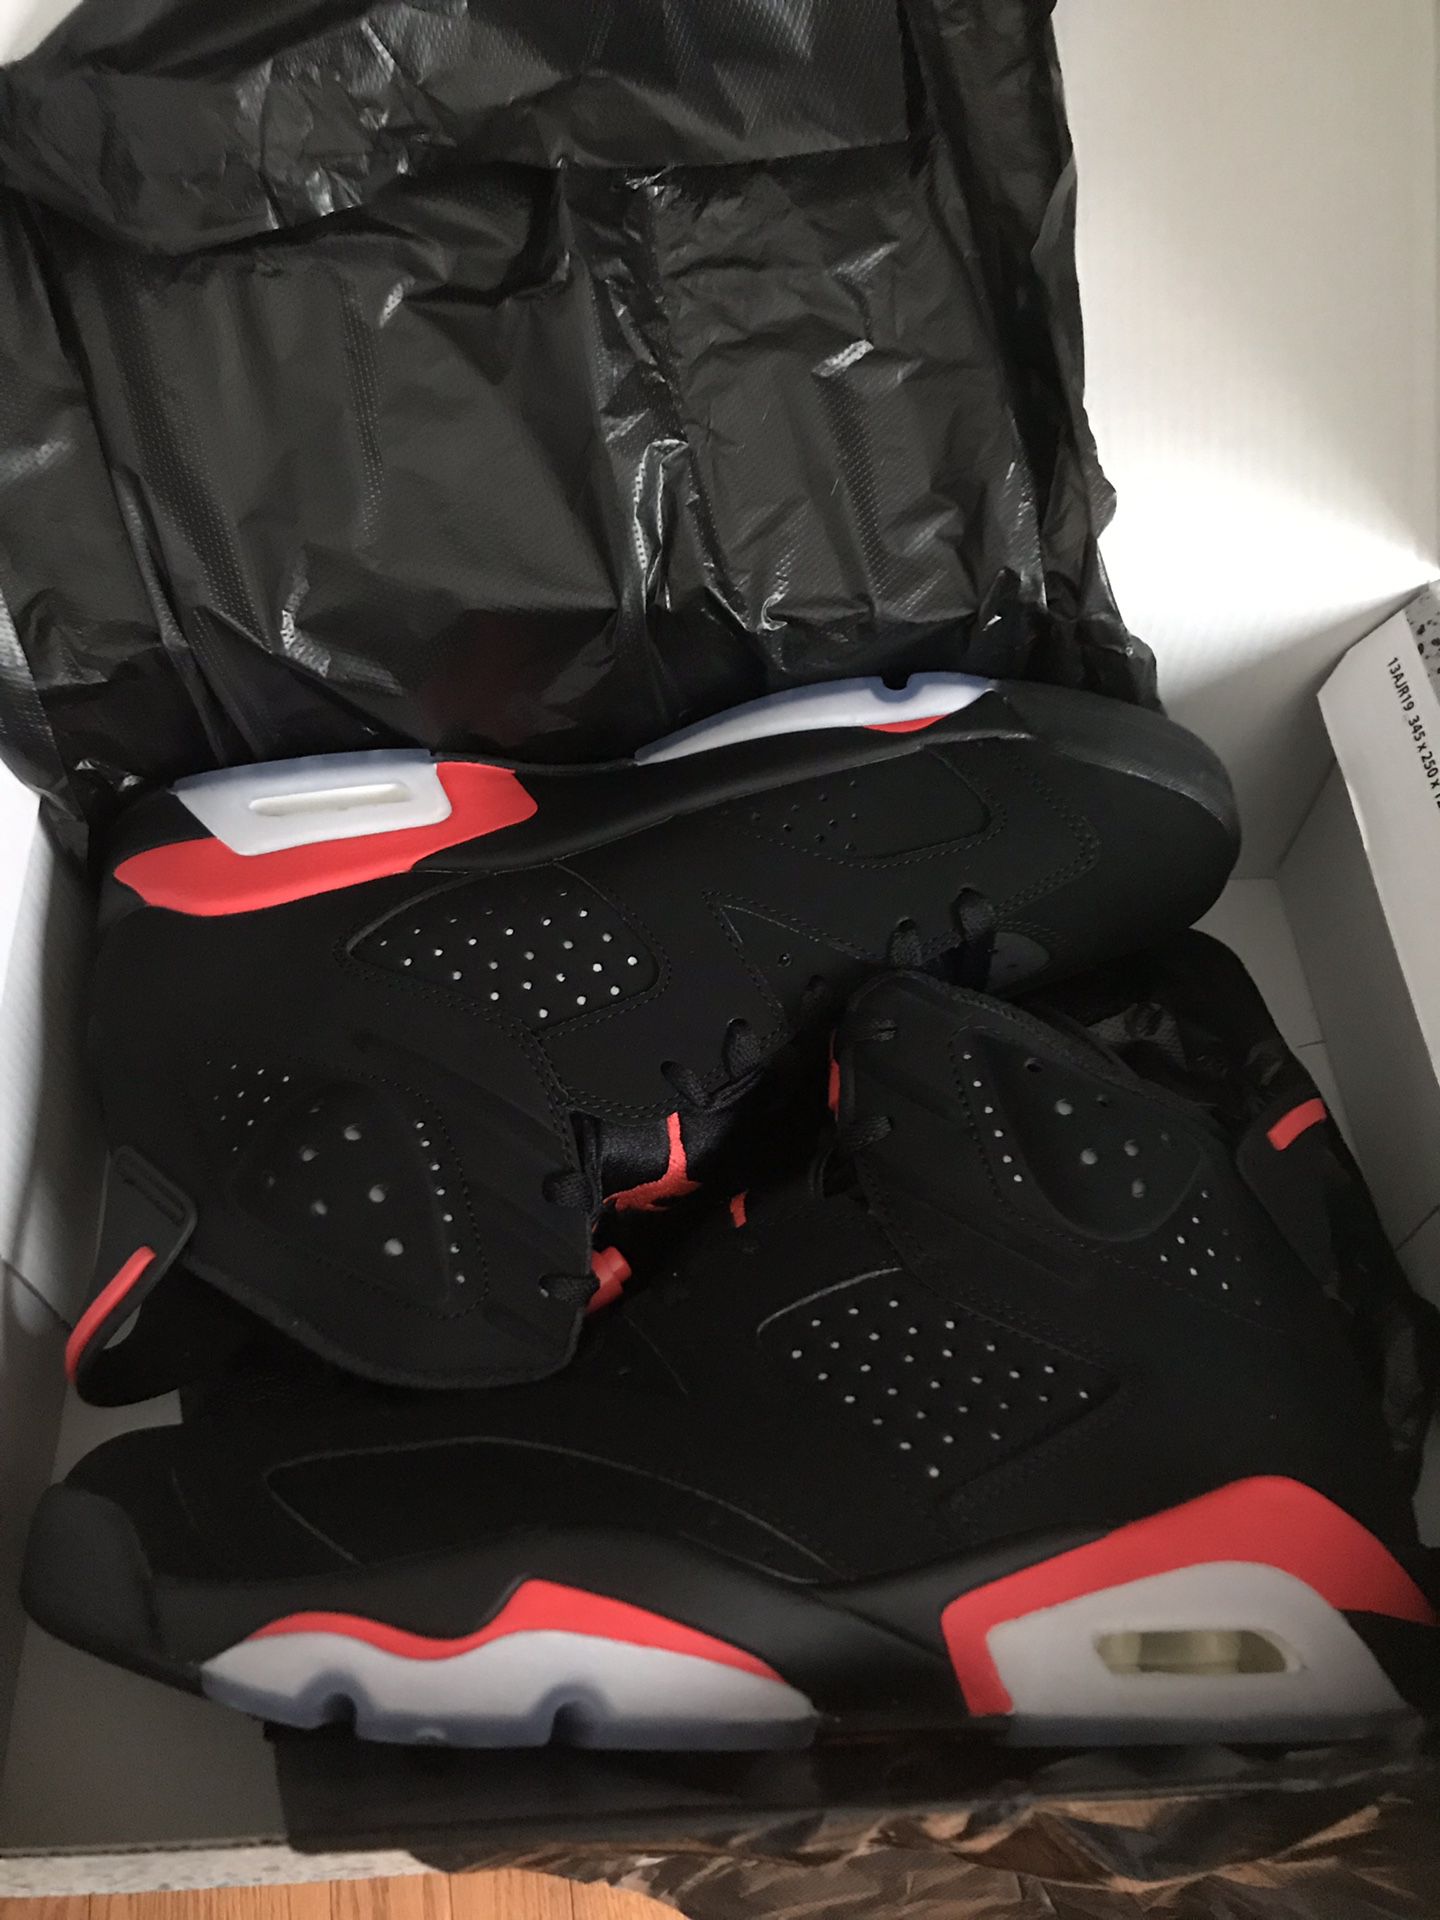 New Jordan Infrared 6 Size 9.5